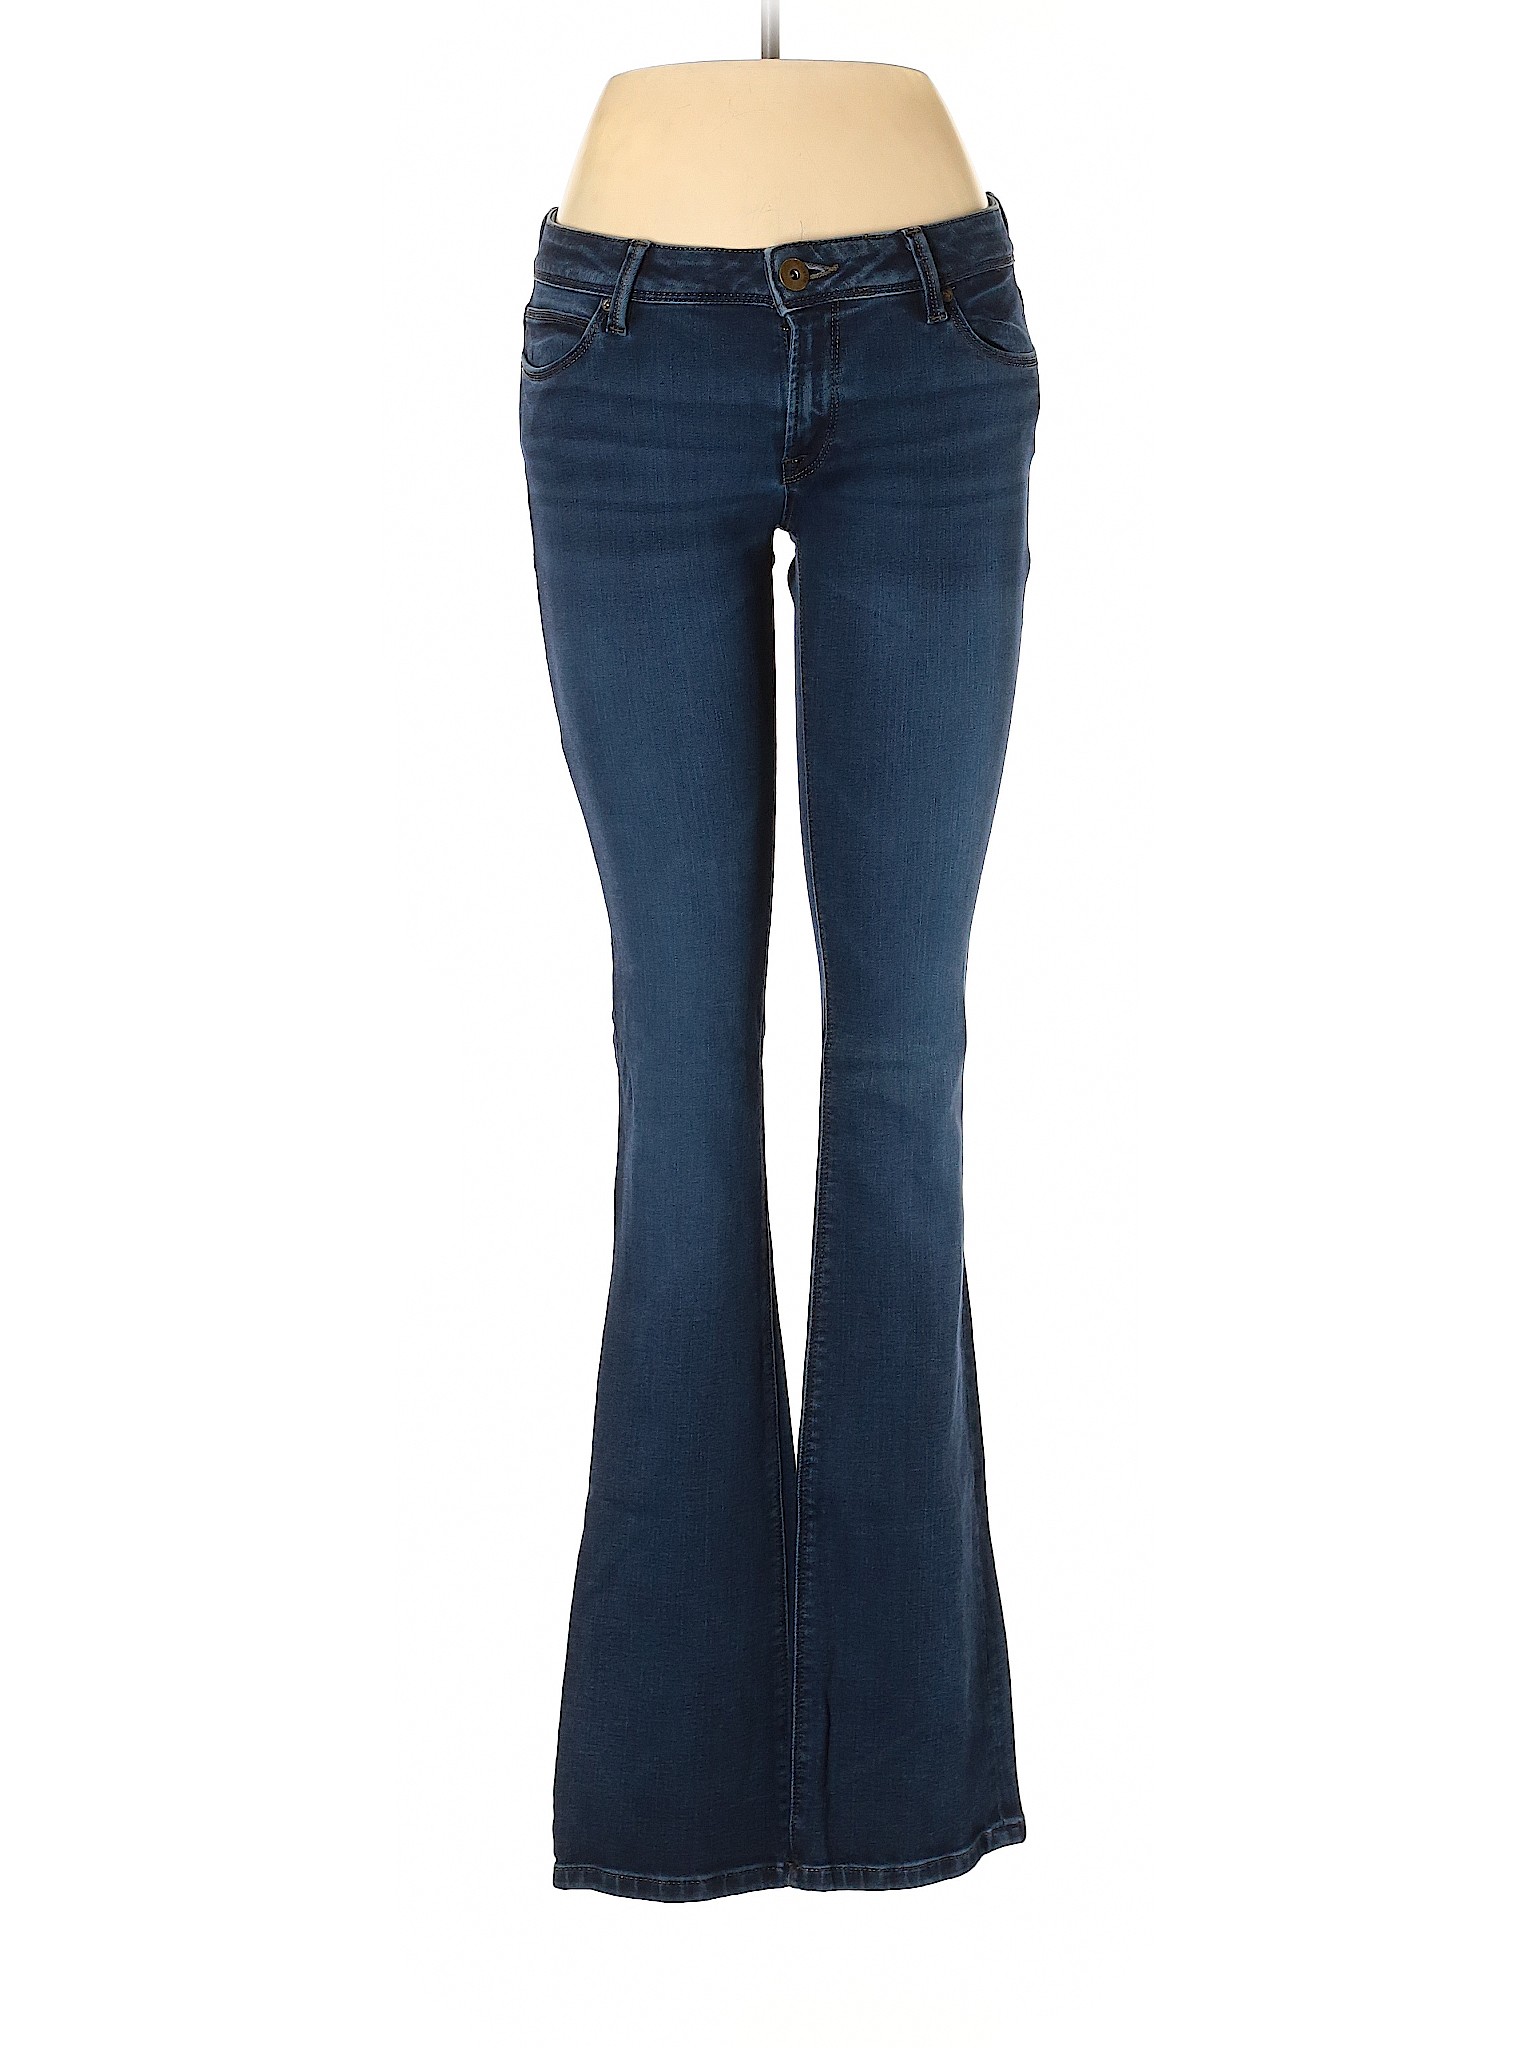 DL1961 - Pre-Owned DL1961 Women's Size 28W Jeans - Walmart.com ...